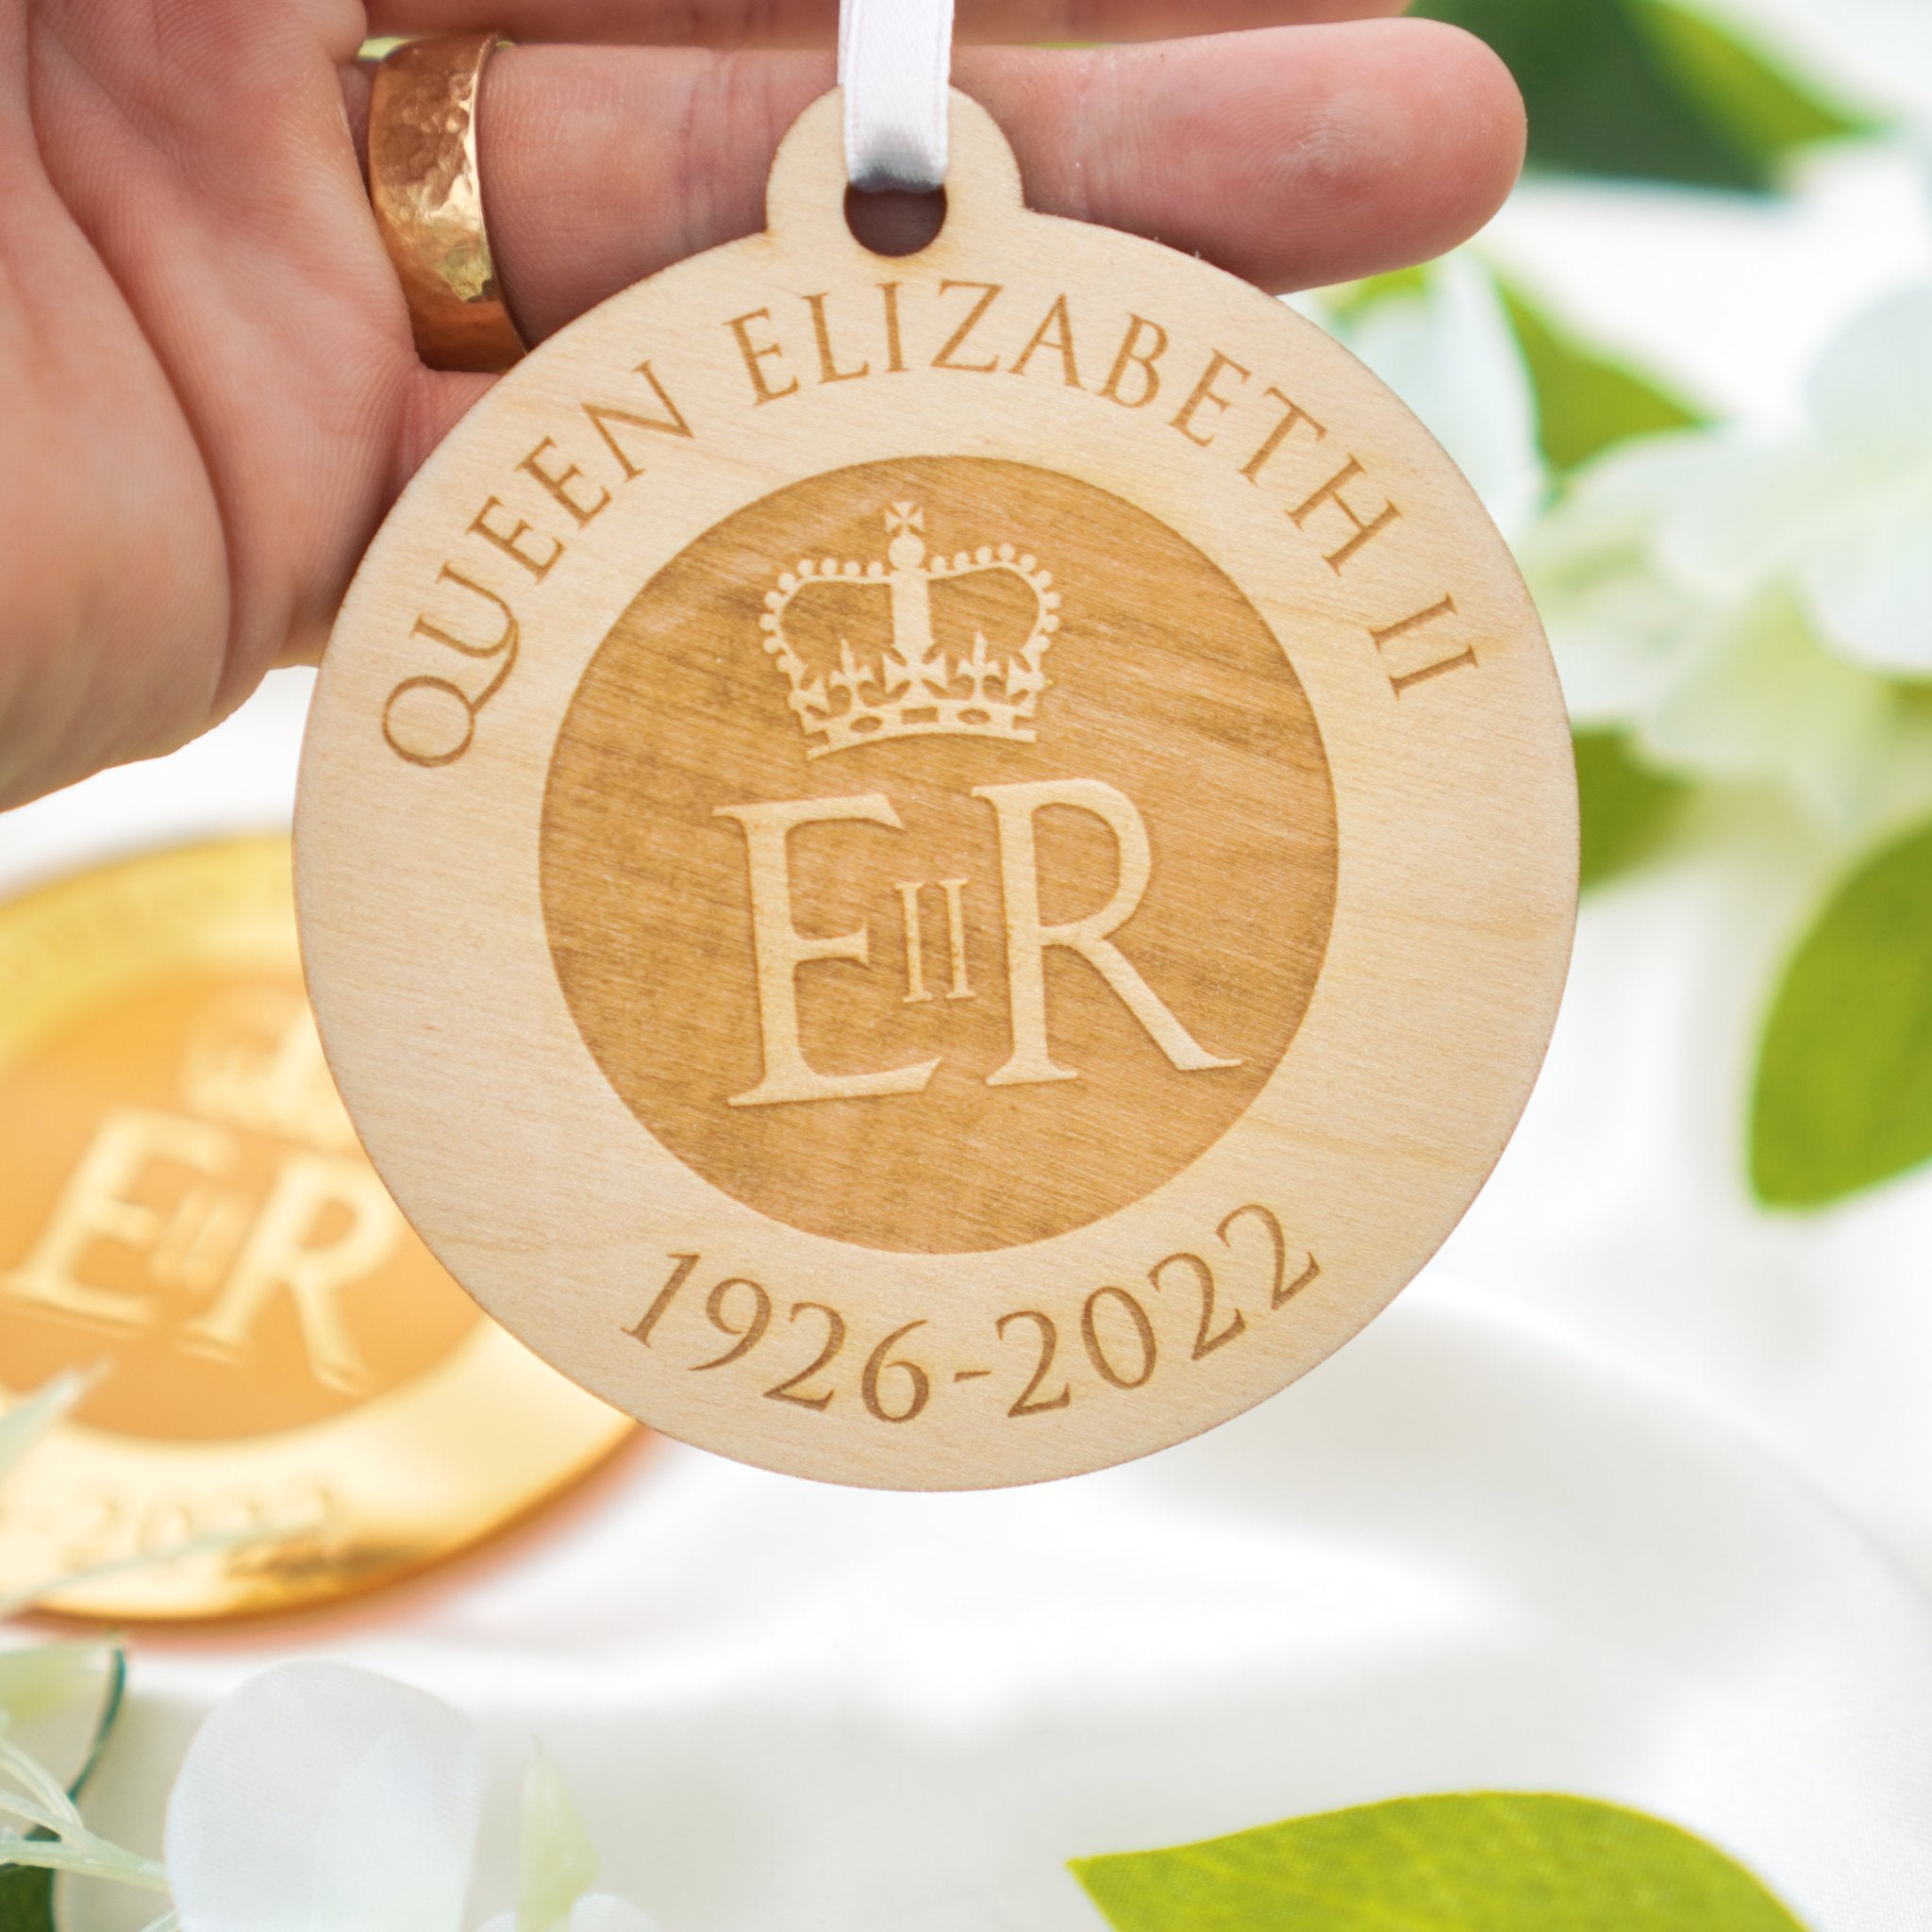 Queen Elizabeth II memorabilia ornament